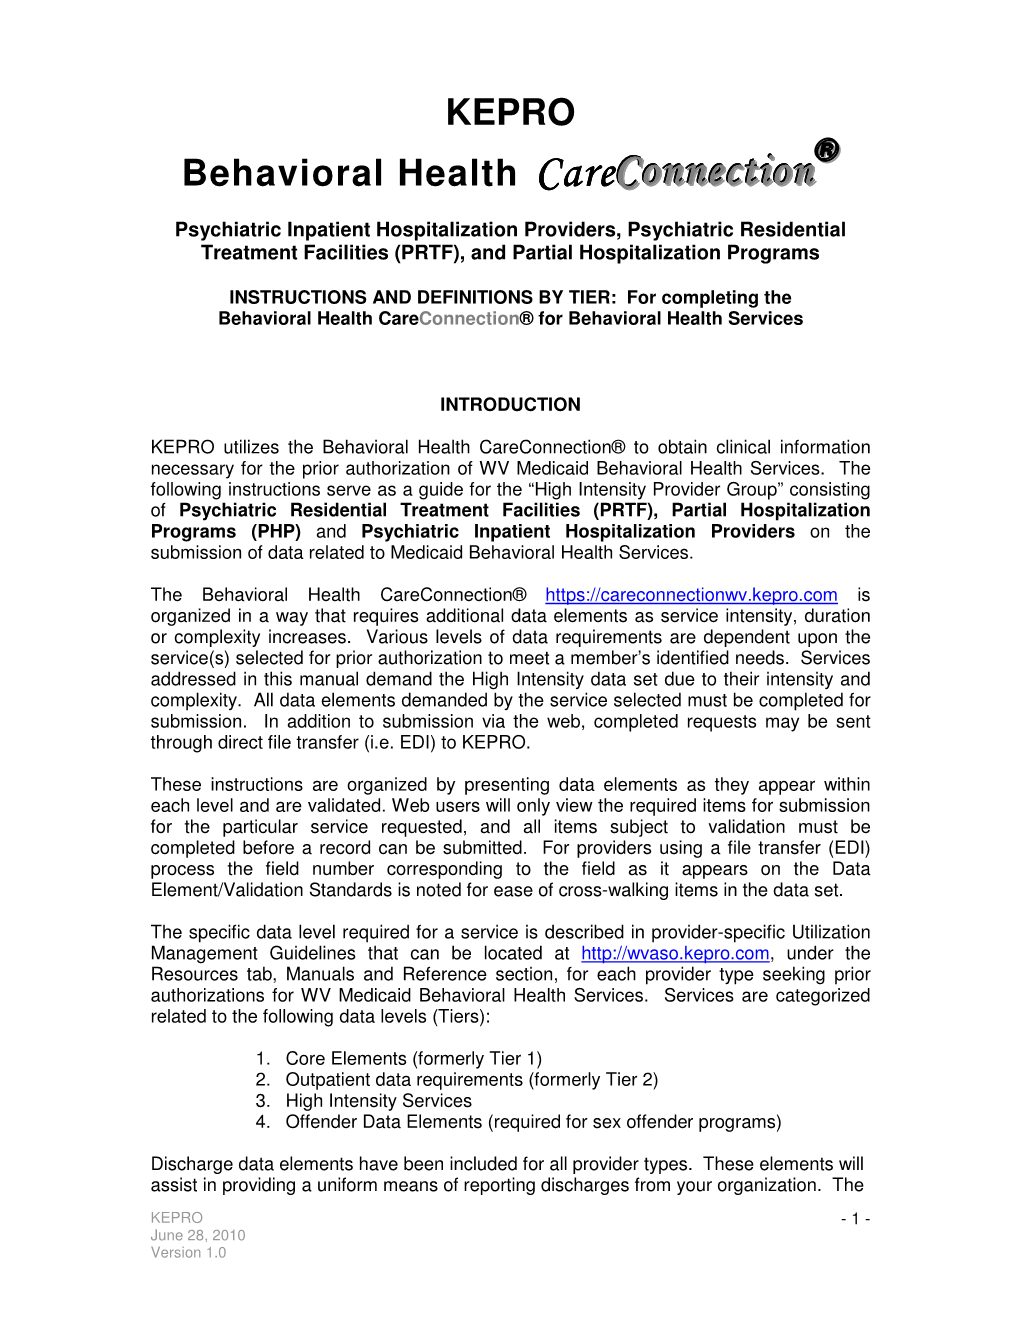 KEPRO Behavioral Health Careconnection